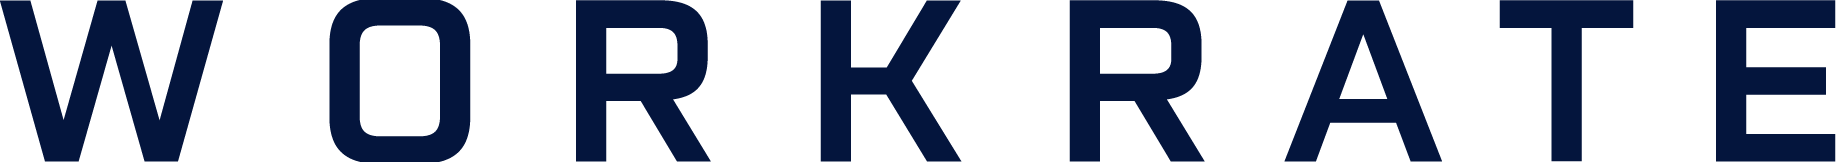 Workrate logo